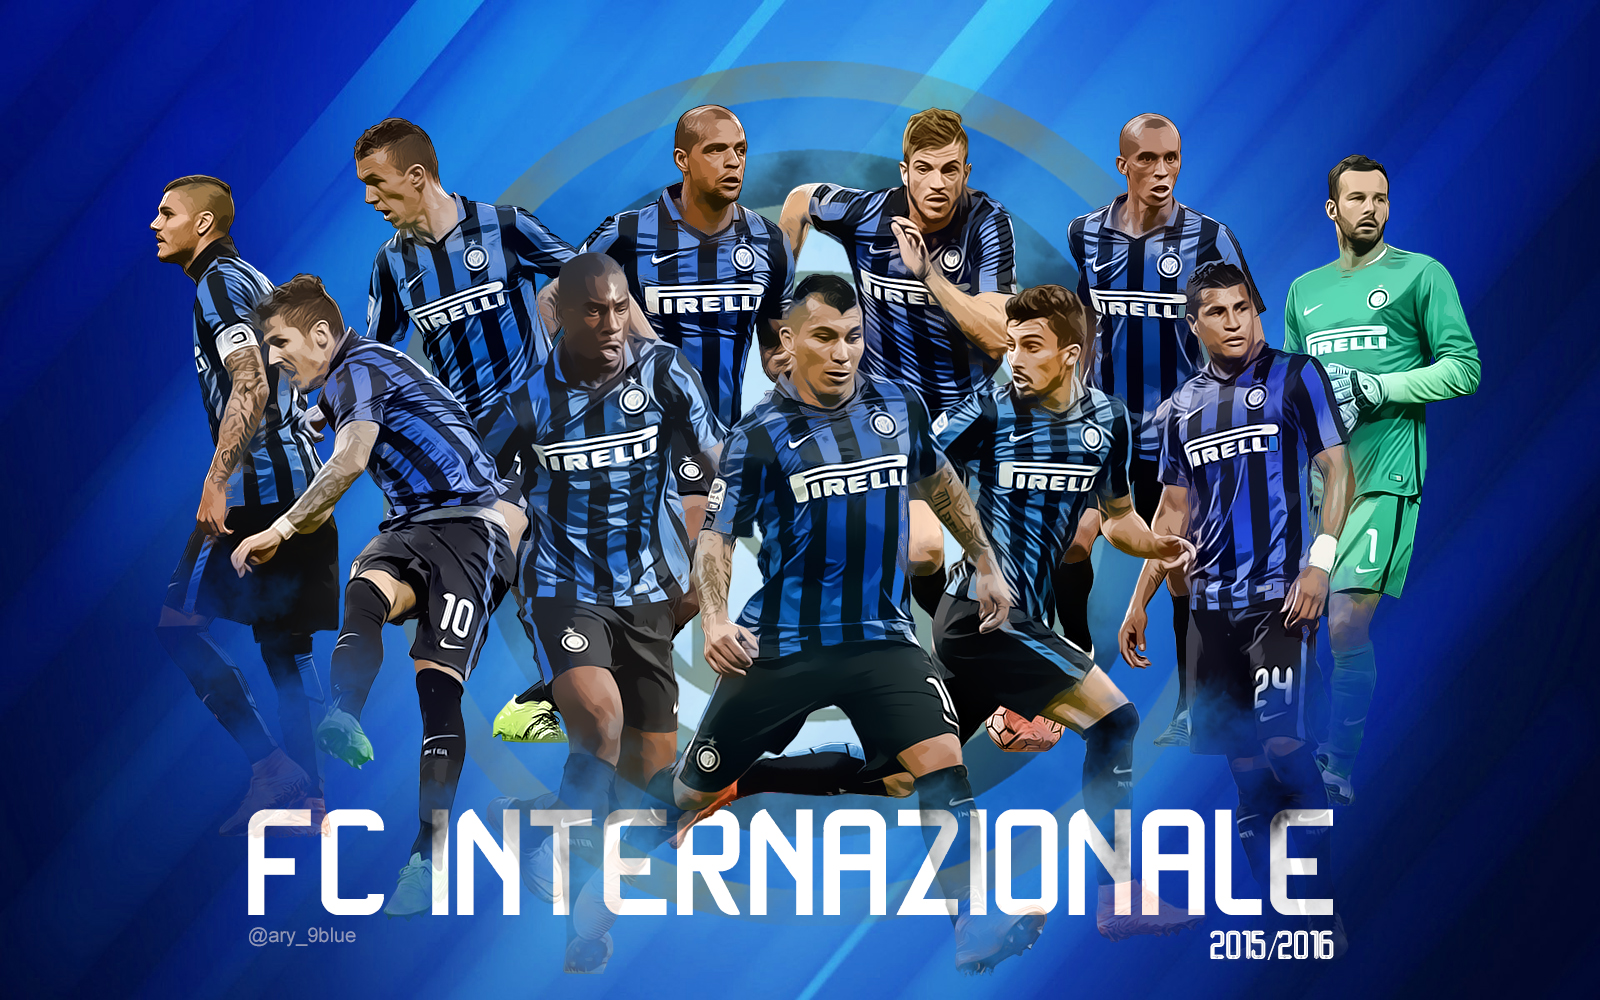 Wallpaper Internazionale XI 2015/16